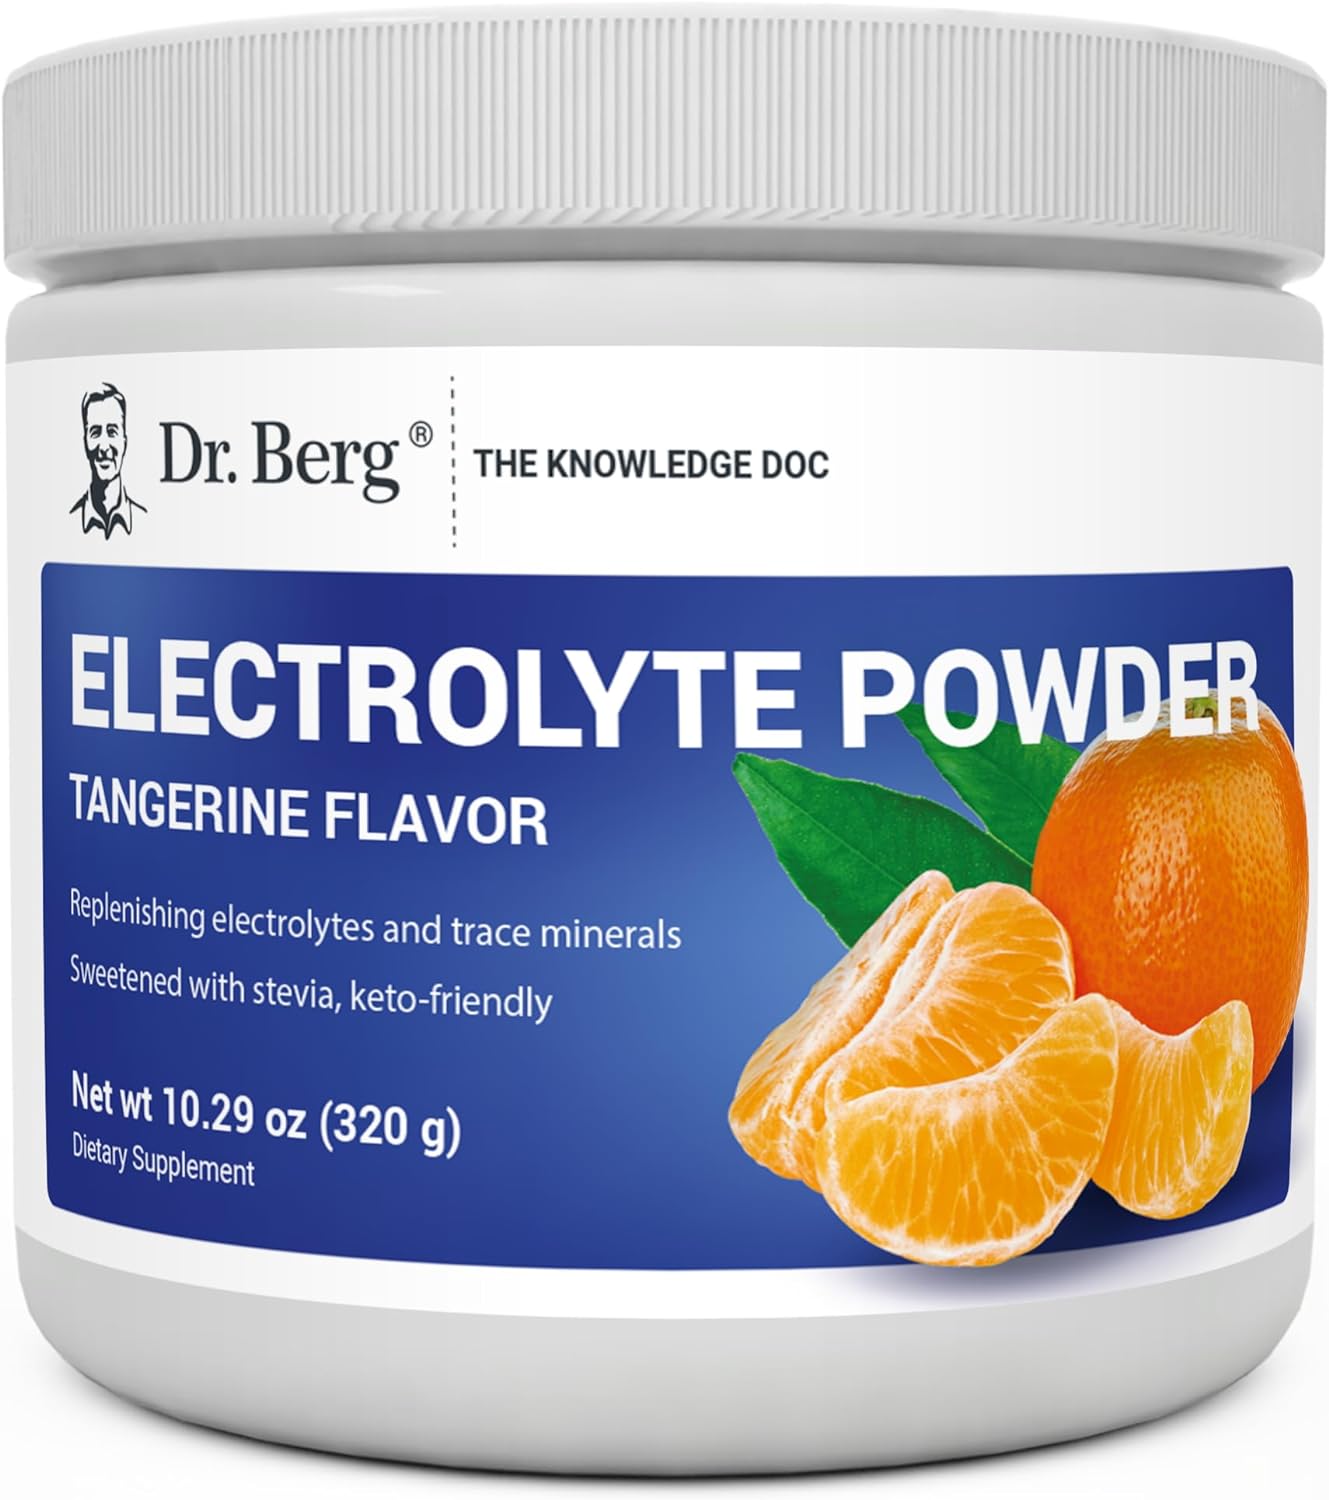 Dr. Berg Hydration Keto Electrolyte Powder - Enhanced w/ 1,000mg of Potassium & Real Pink Himalayan Salt (NOT Table Salt) - Tangerine Flavor Hydration Drink Mix Supplement - 50 Servings